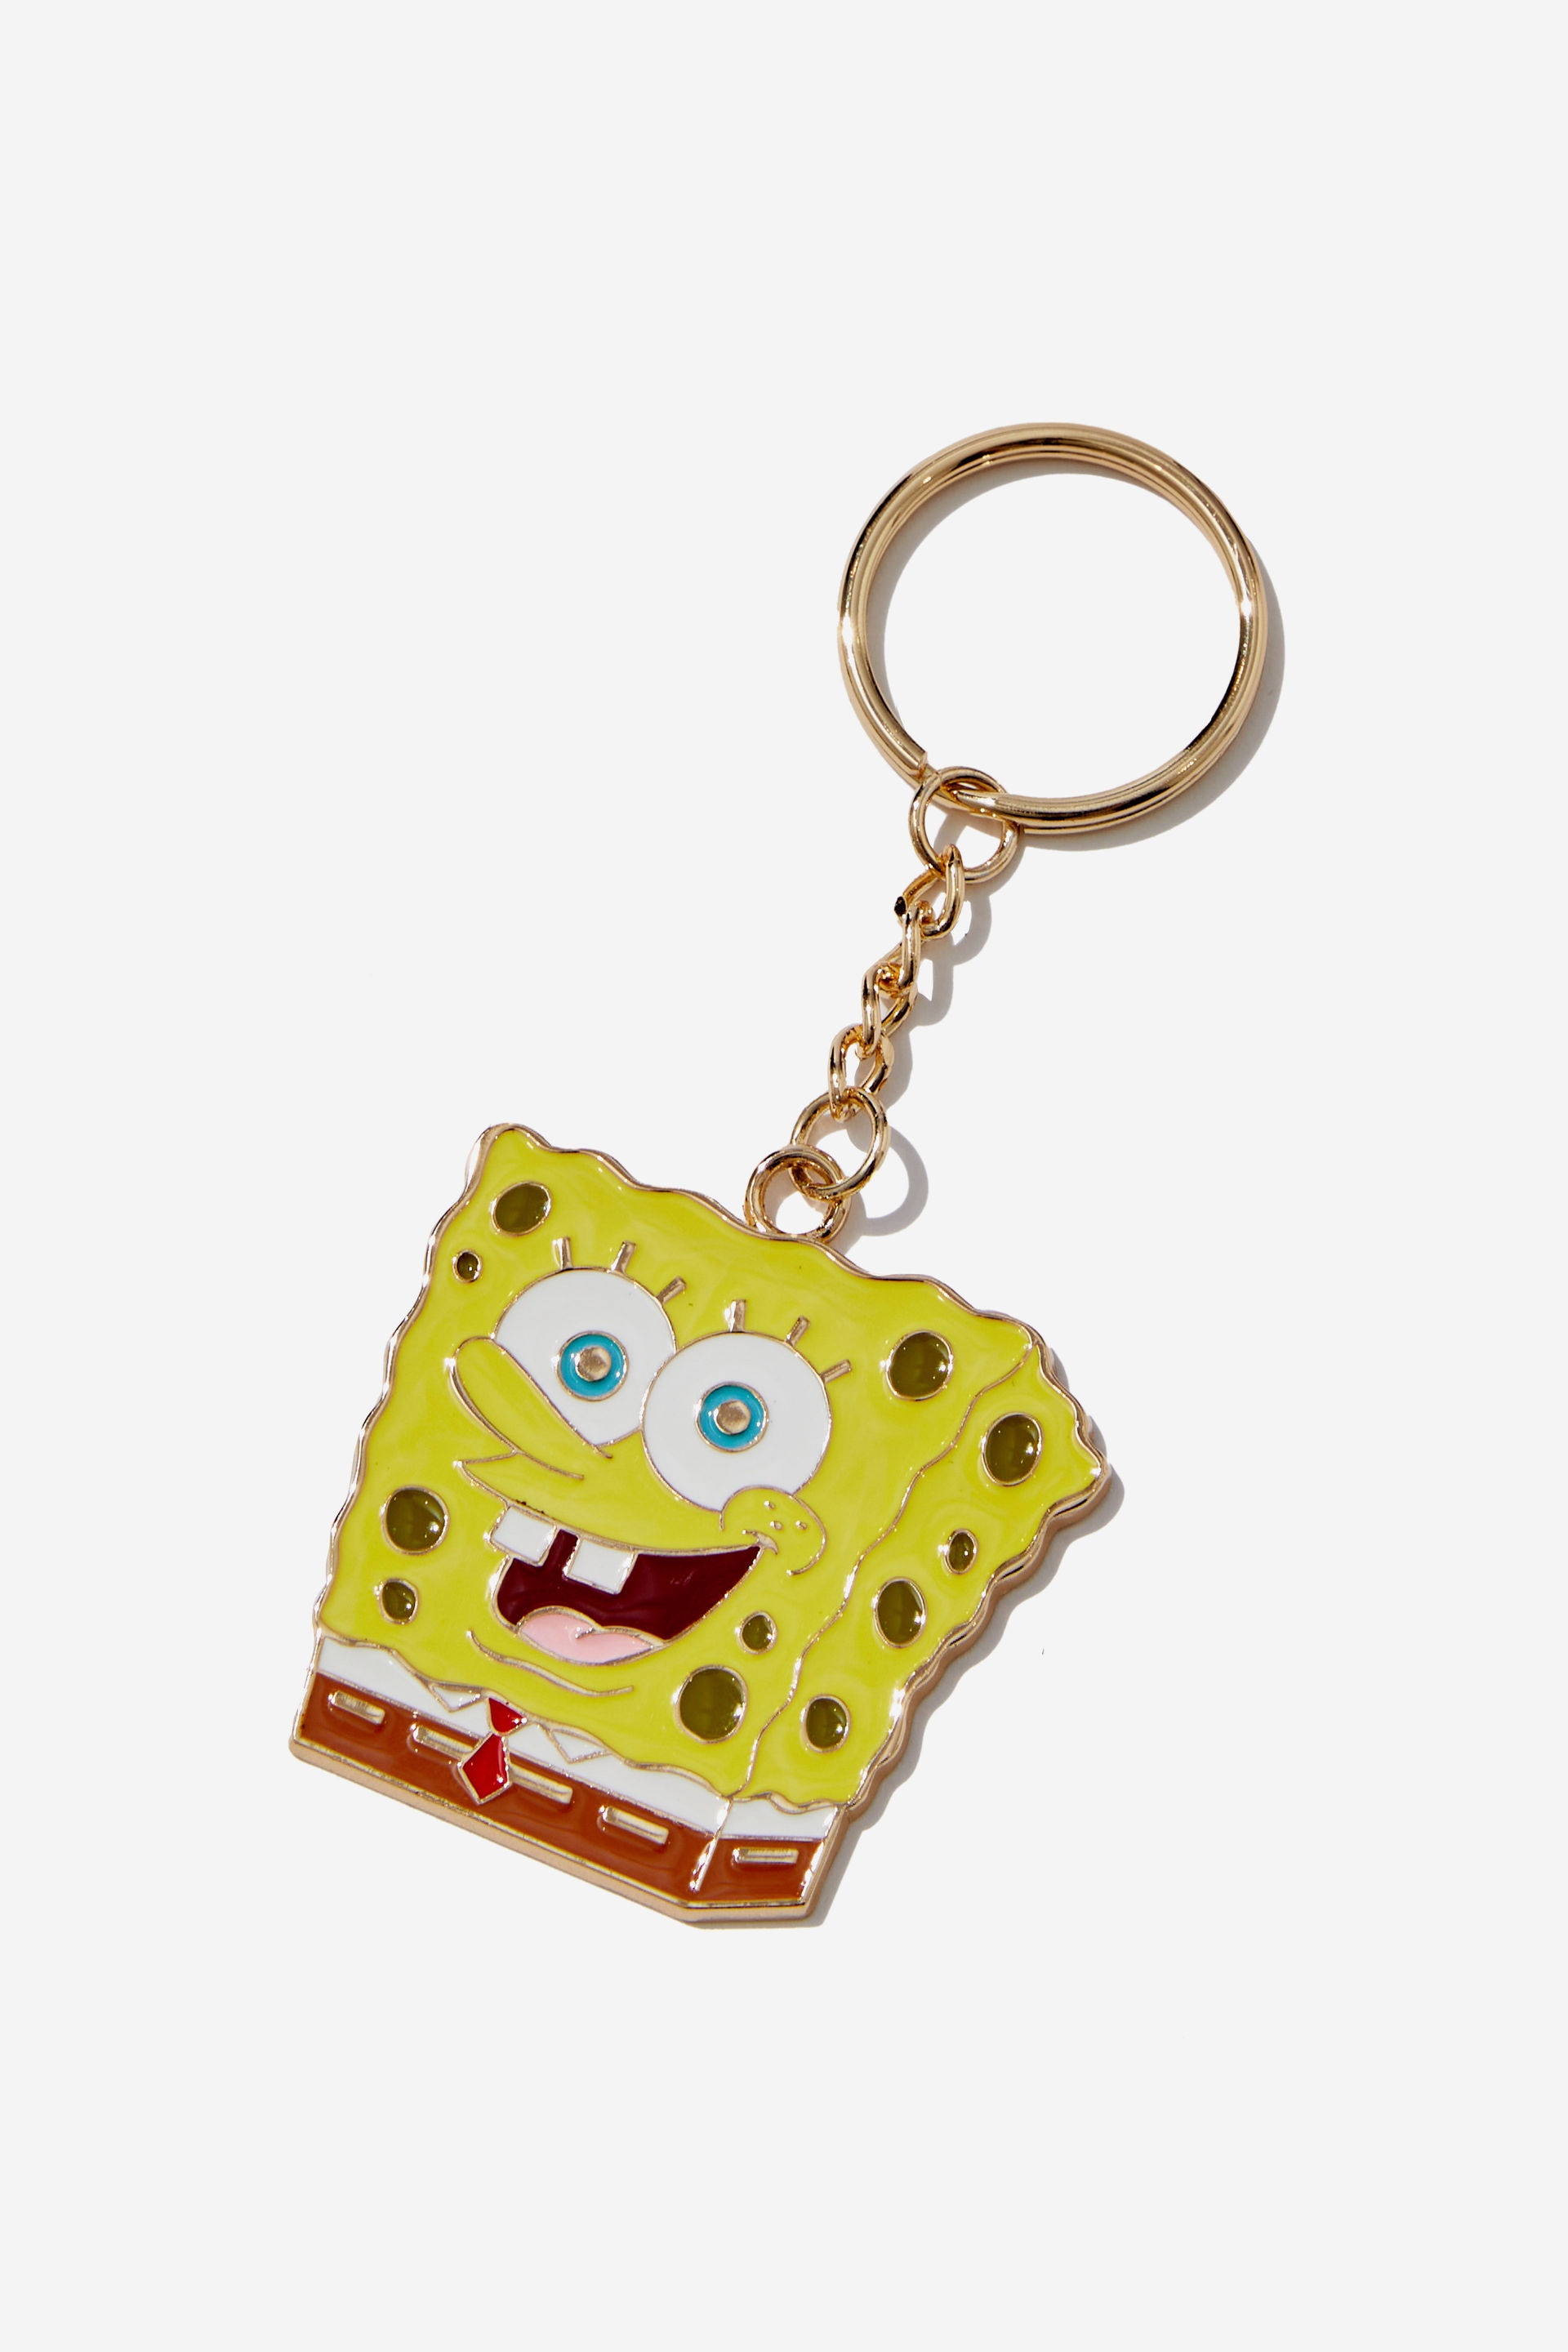 Typo - SpongeBob SquarePants Enamel Keyring - Lcn nic/ spongebob